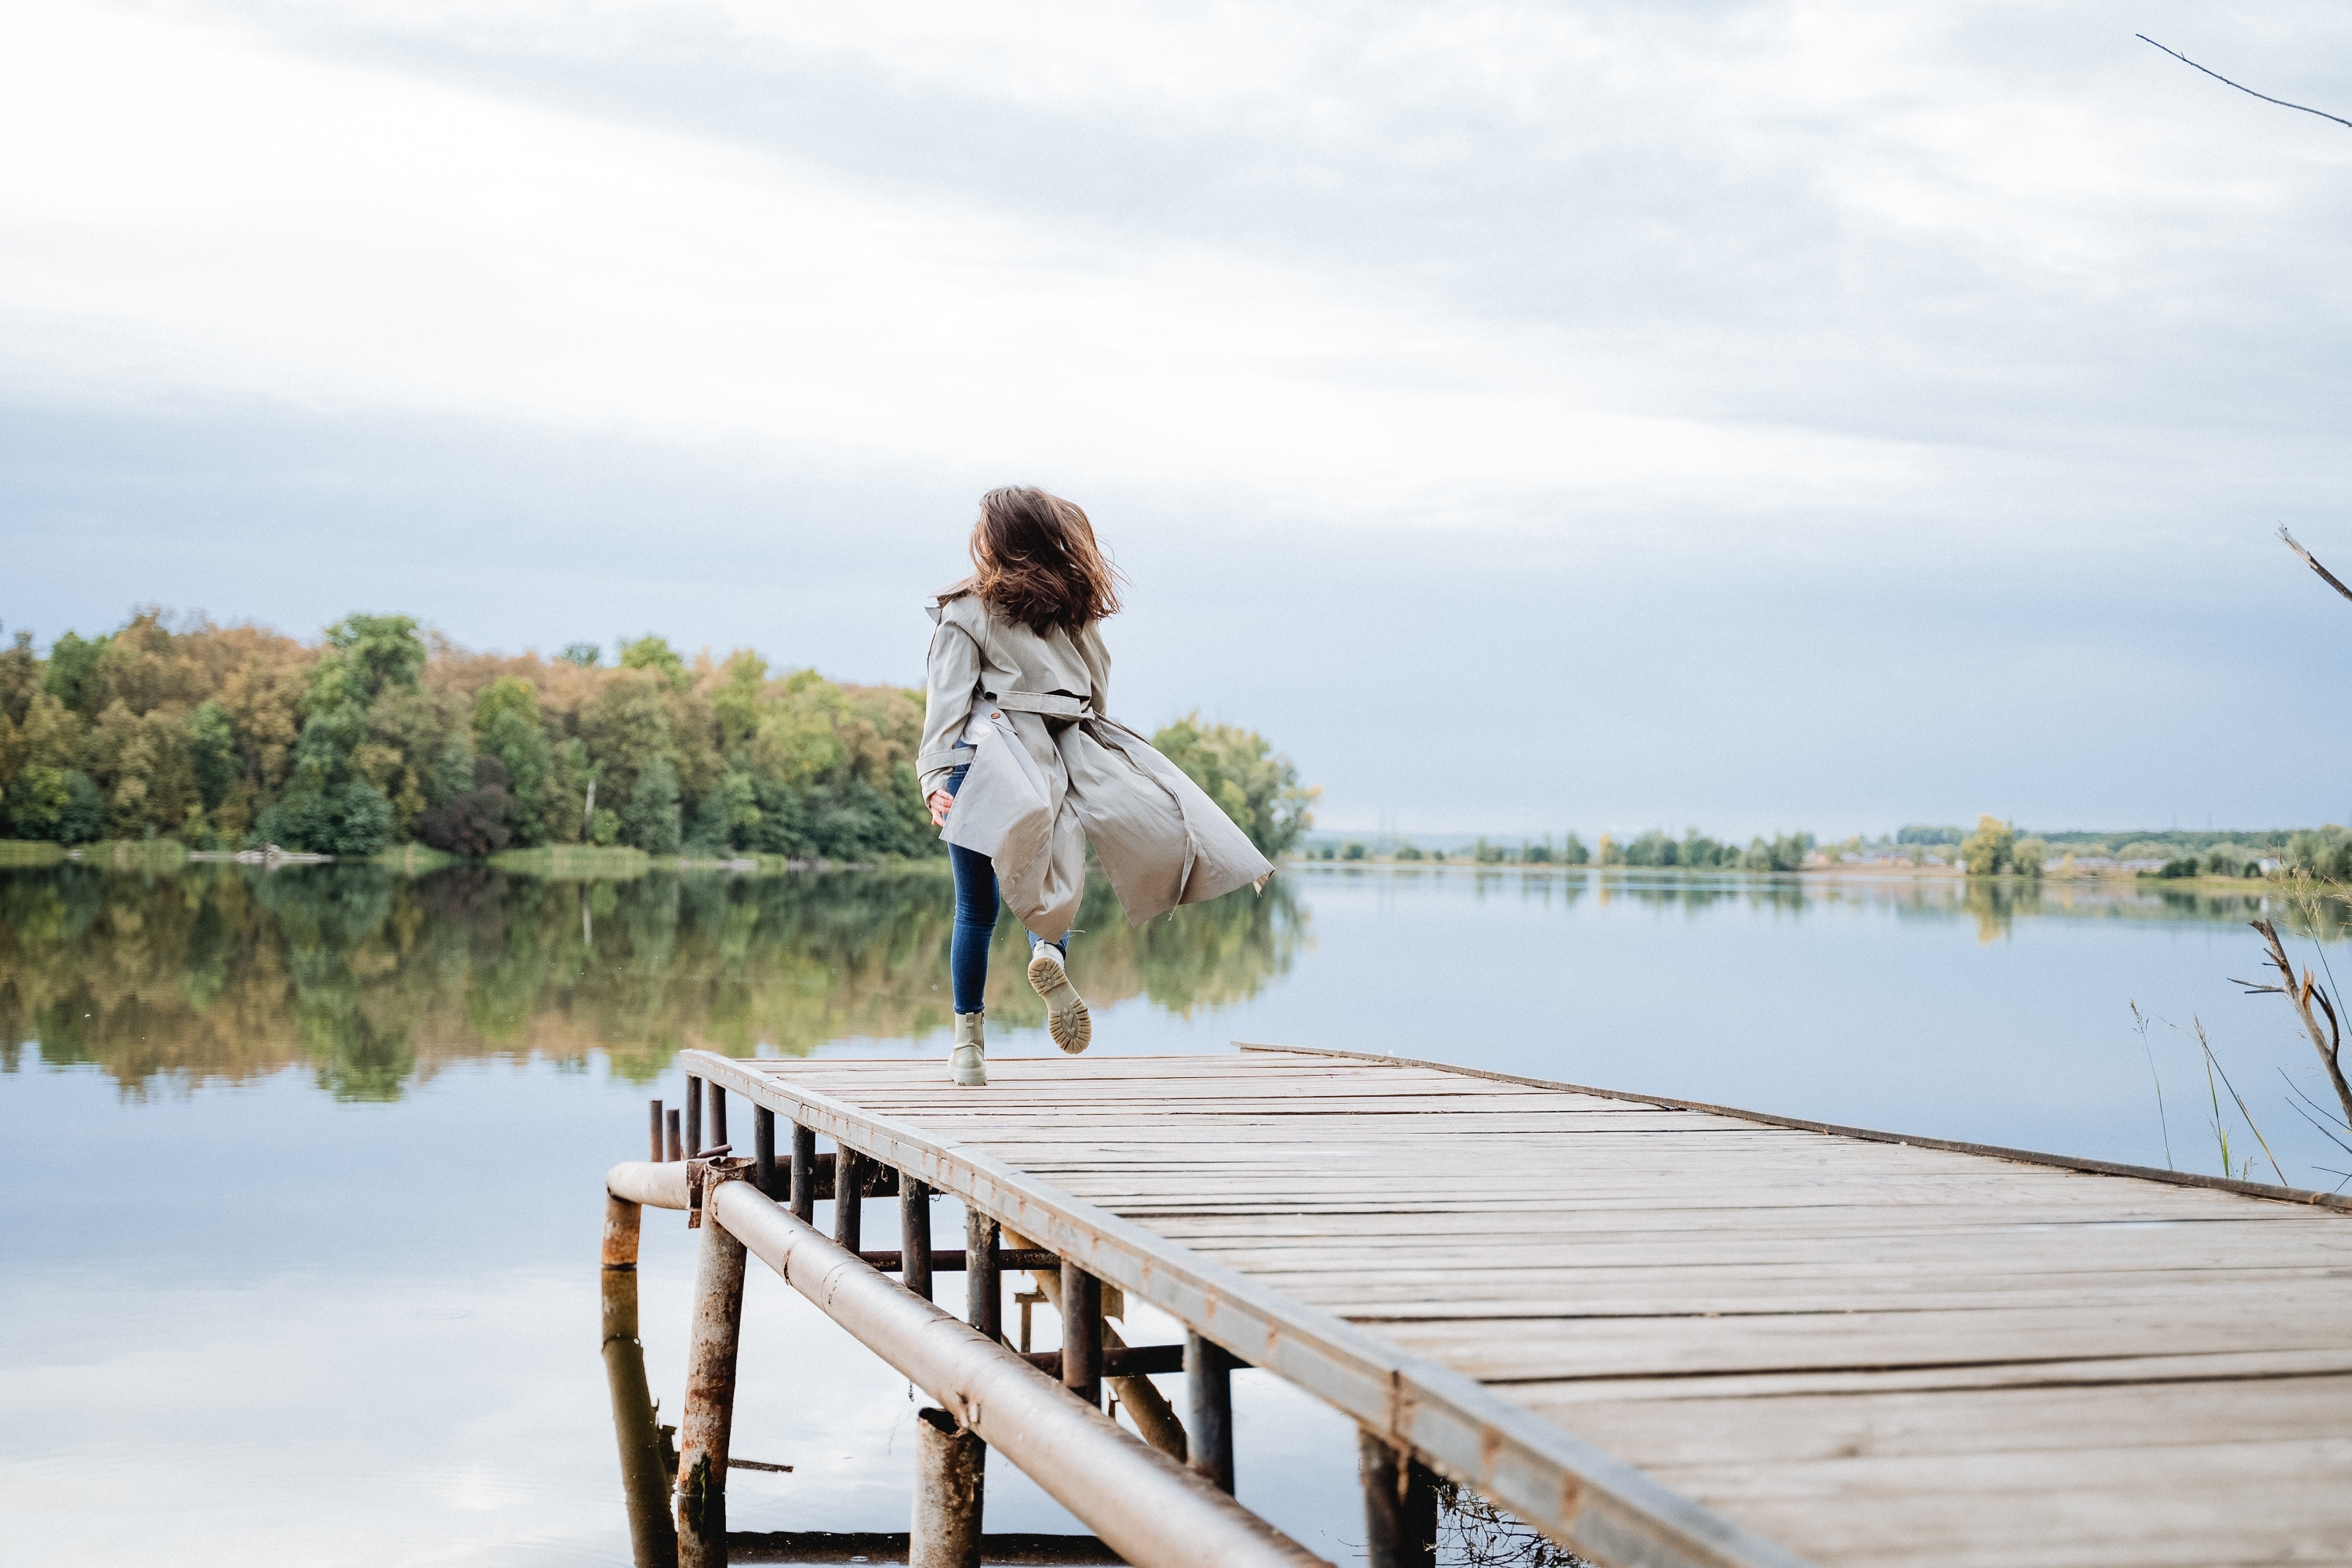 A girl in a raincoat runs across a bridge | Source: Shutterstock